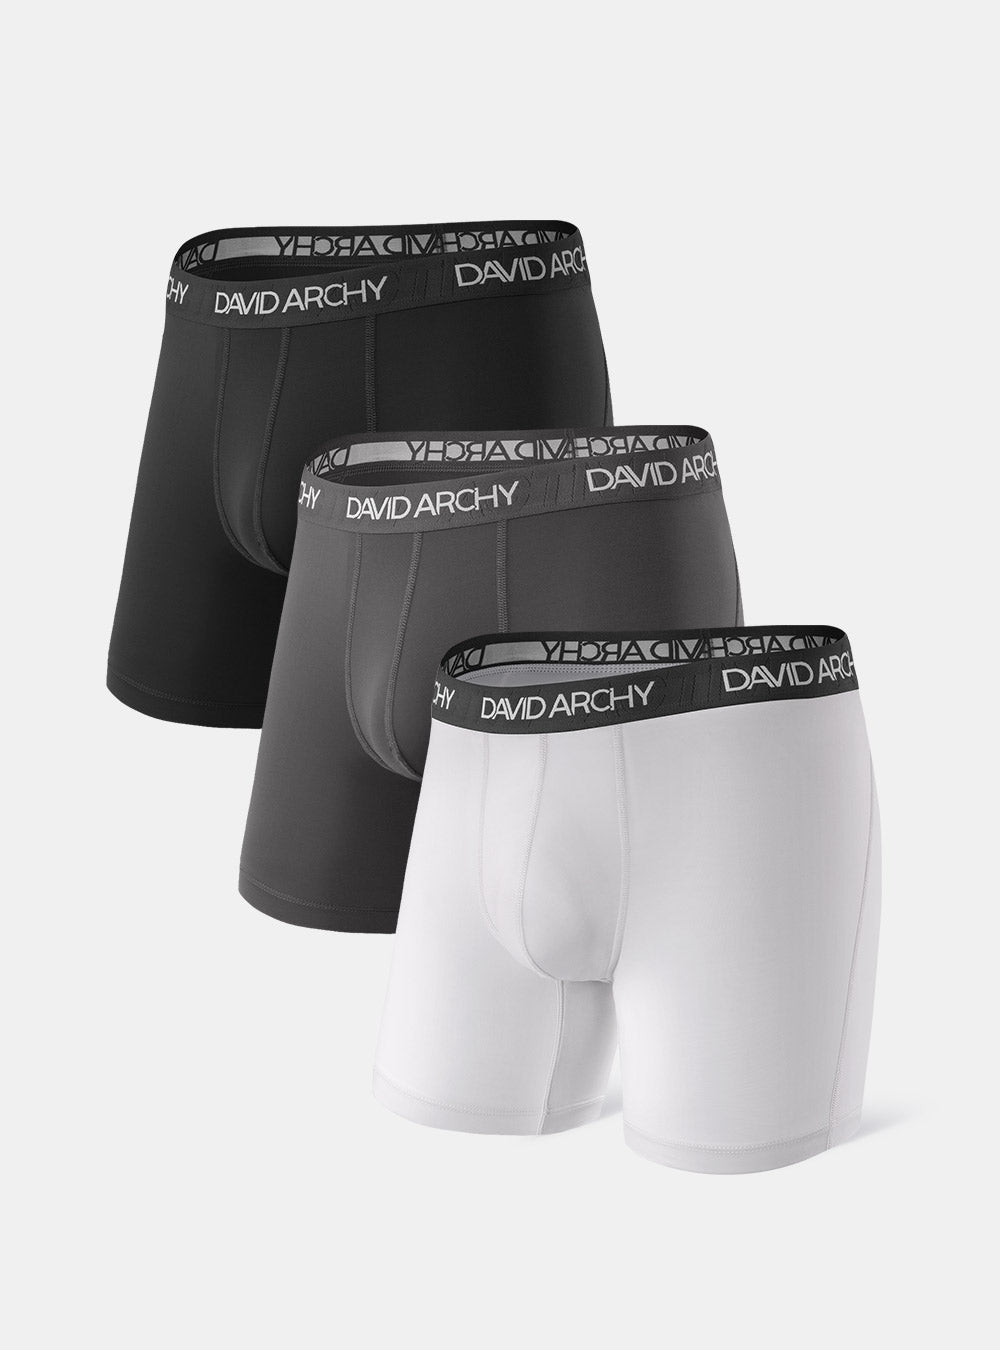 David Archy Quick-Dry Sport Boxer Briefs #davidarchy #davidarchylifest